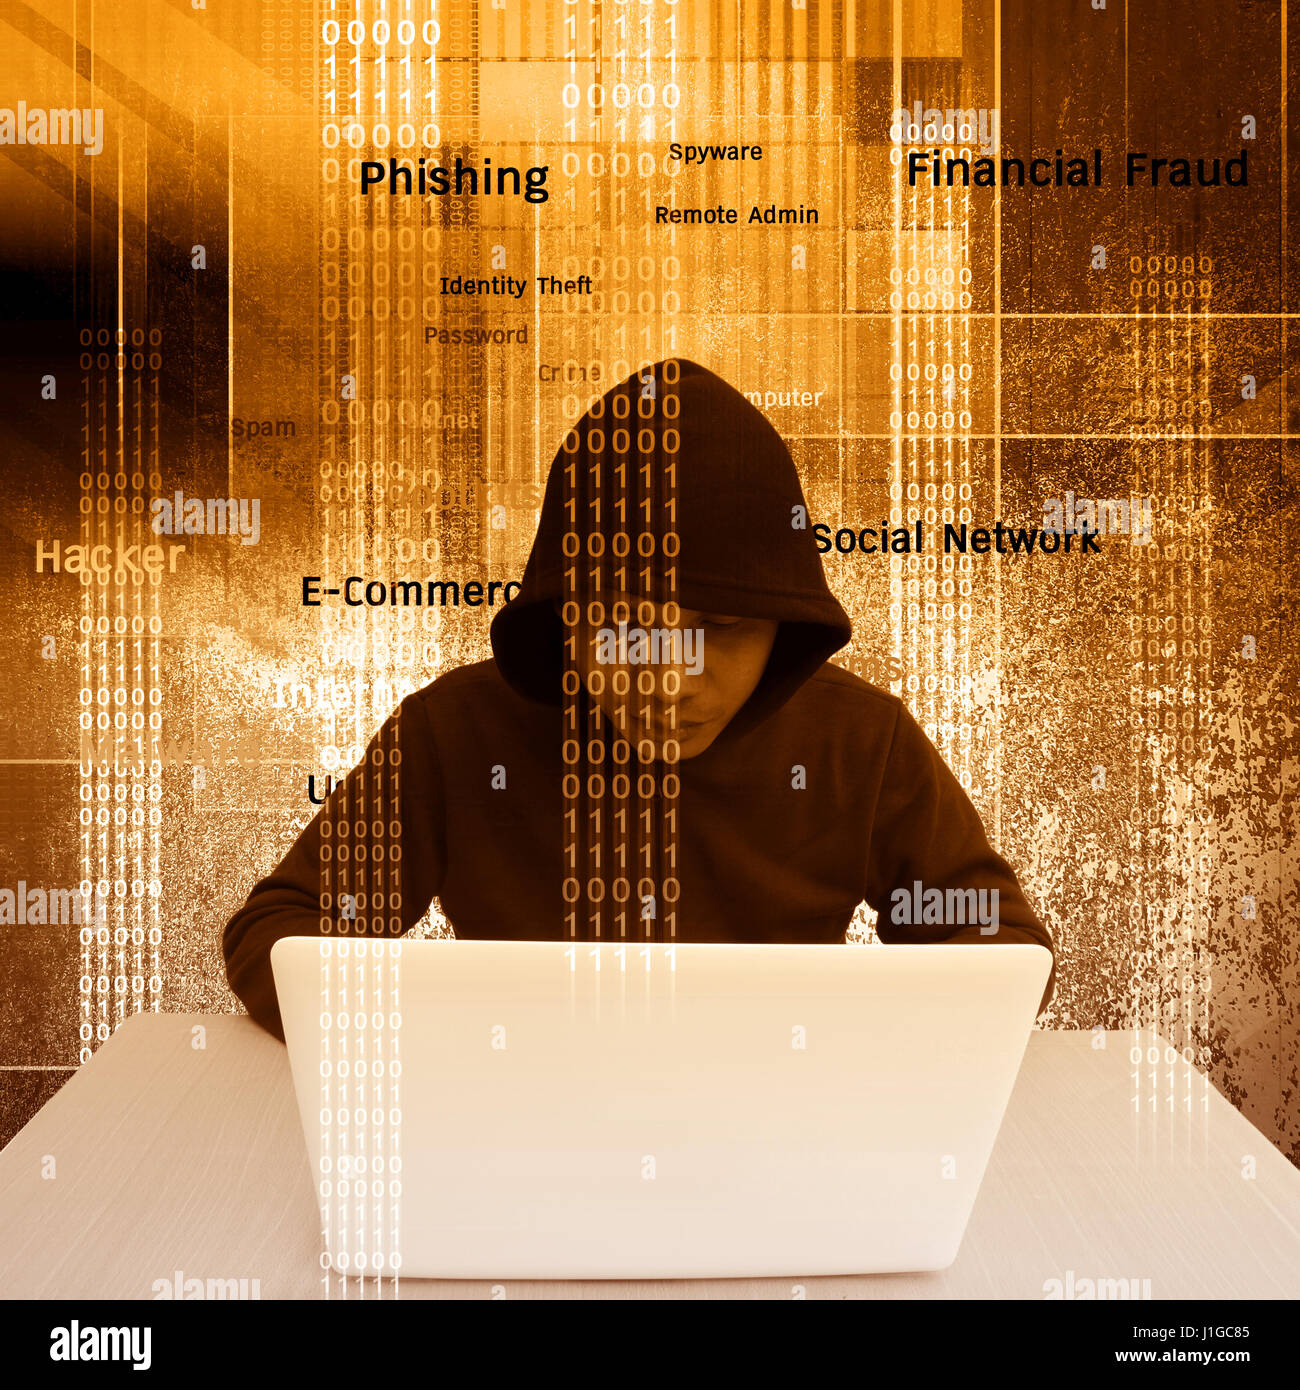 Cyber-attaque ou pirate informatique contexte concept Banque D'Images